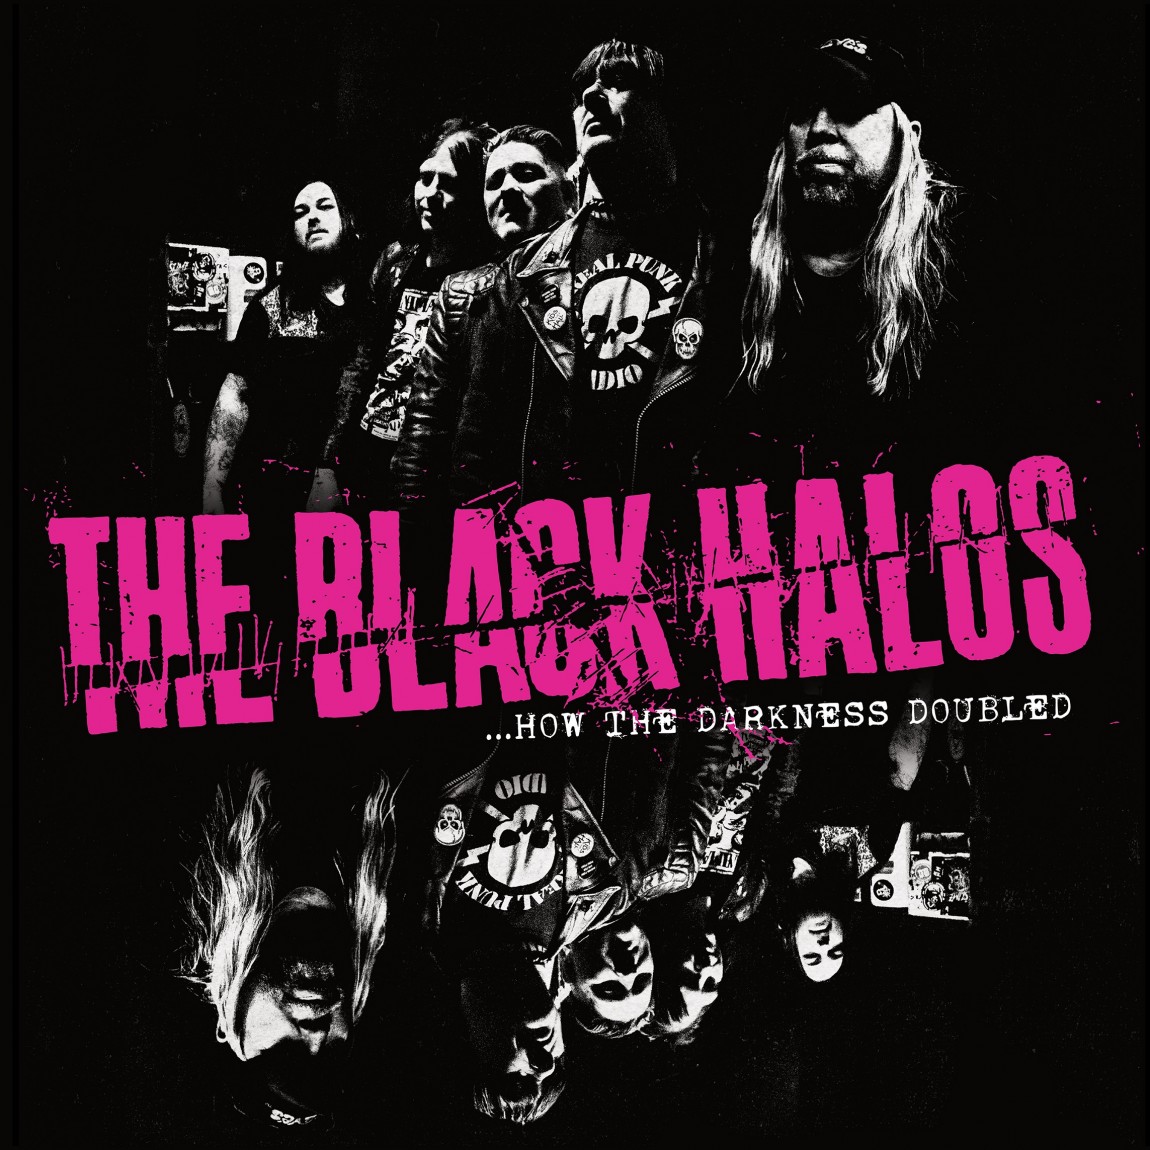 New Black Halos Album Coming Nov 25th!